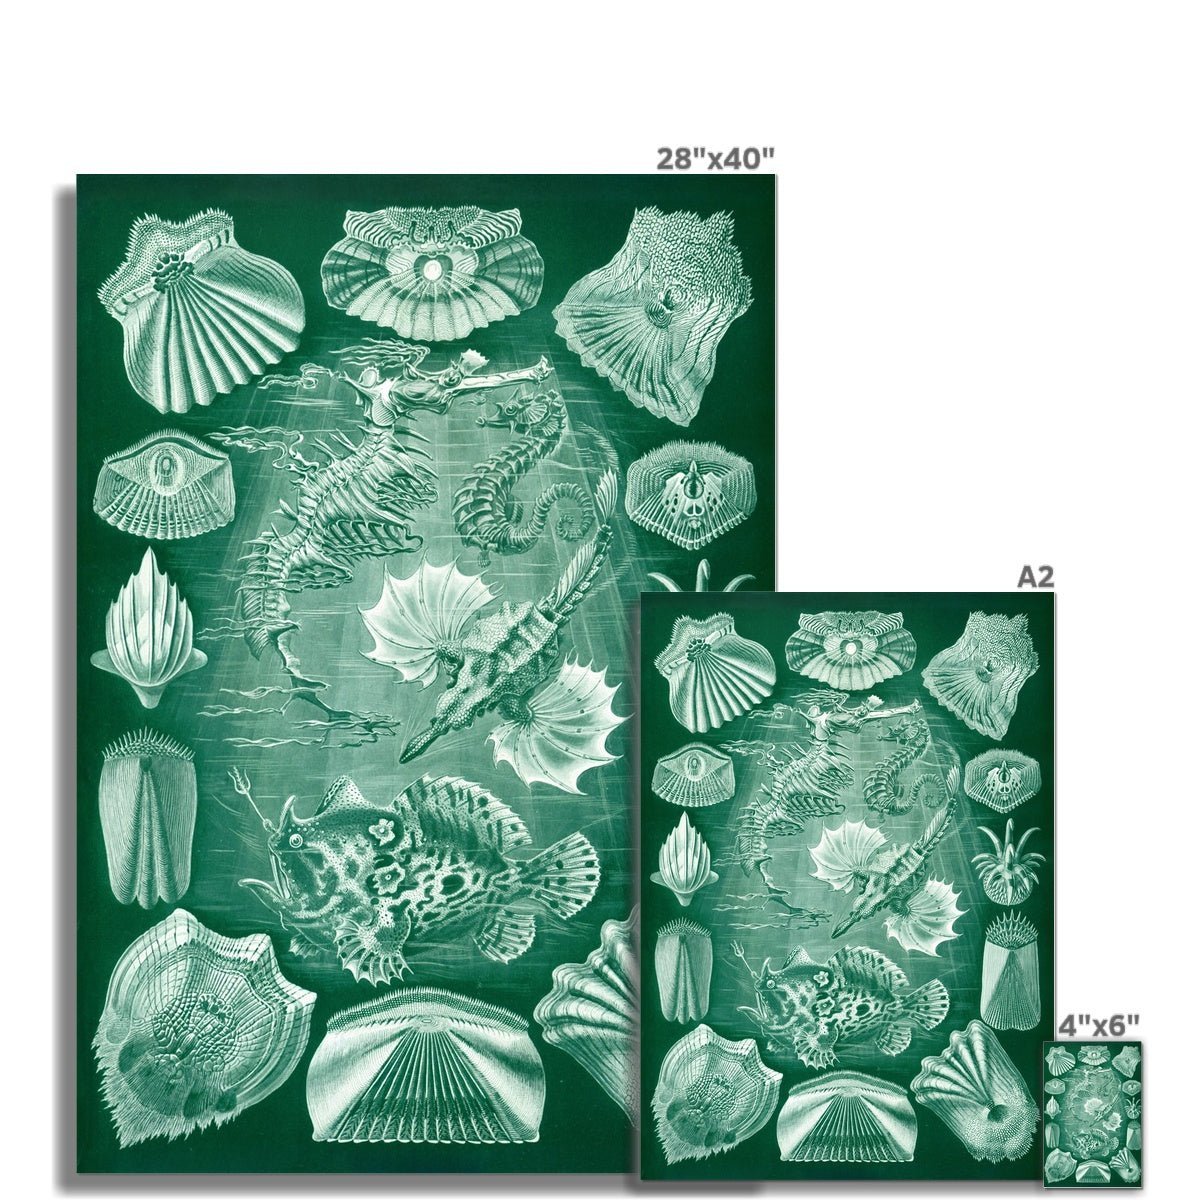 giclee 4"x6" Ernst Haeckel Teleostei Marine Life Seashells Ocean Life Scuba Beach Vintage Giclée Fine Art Print